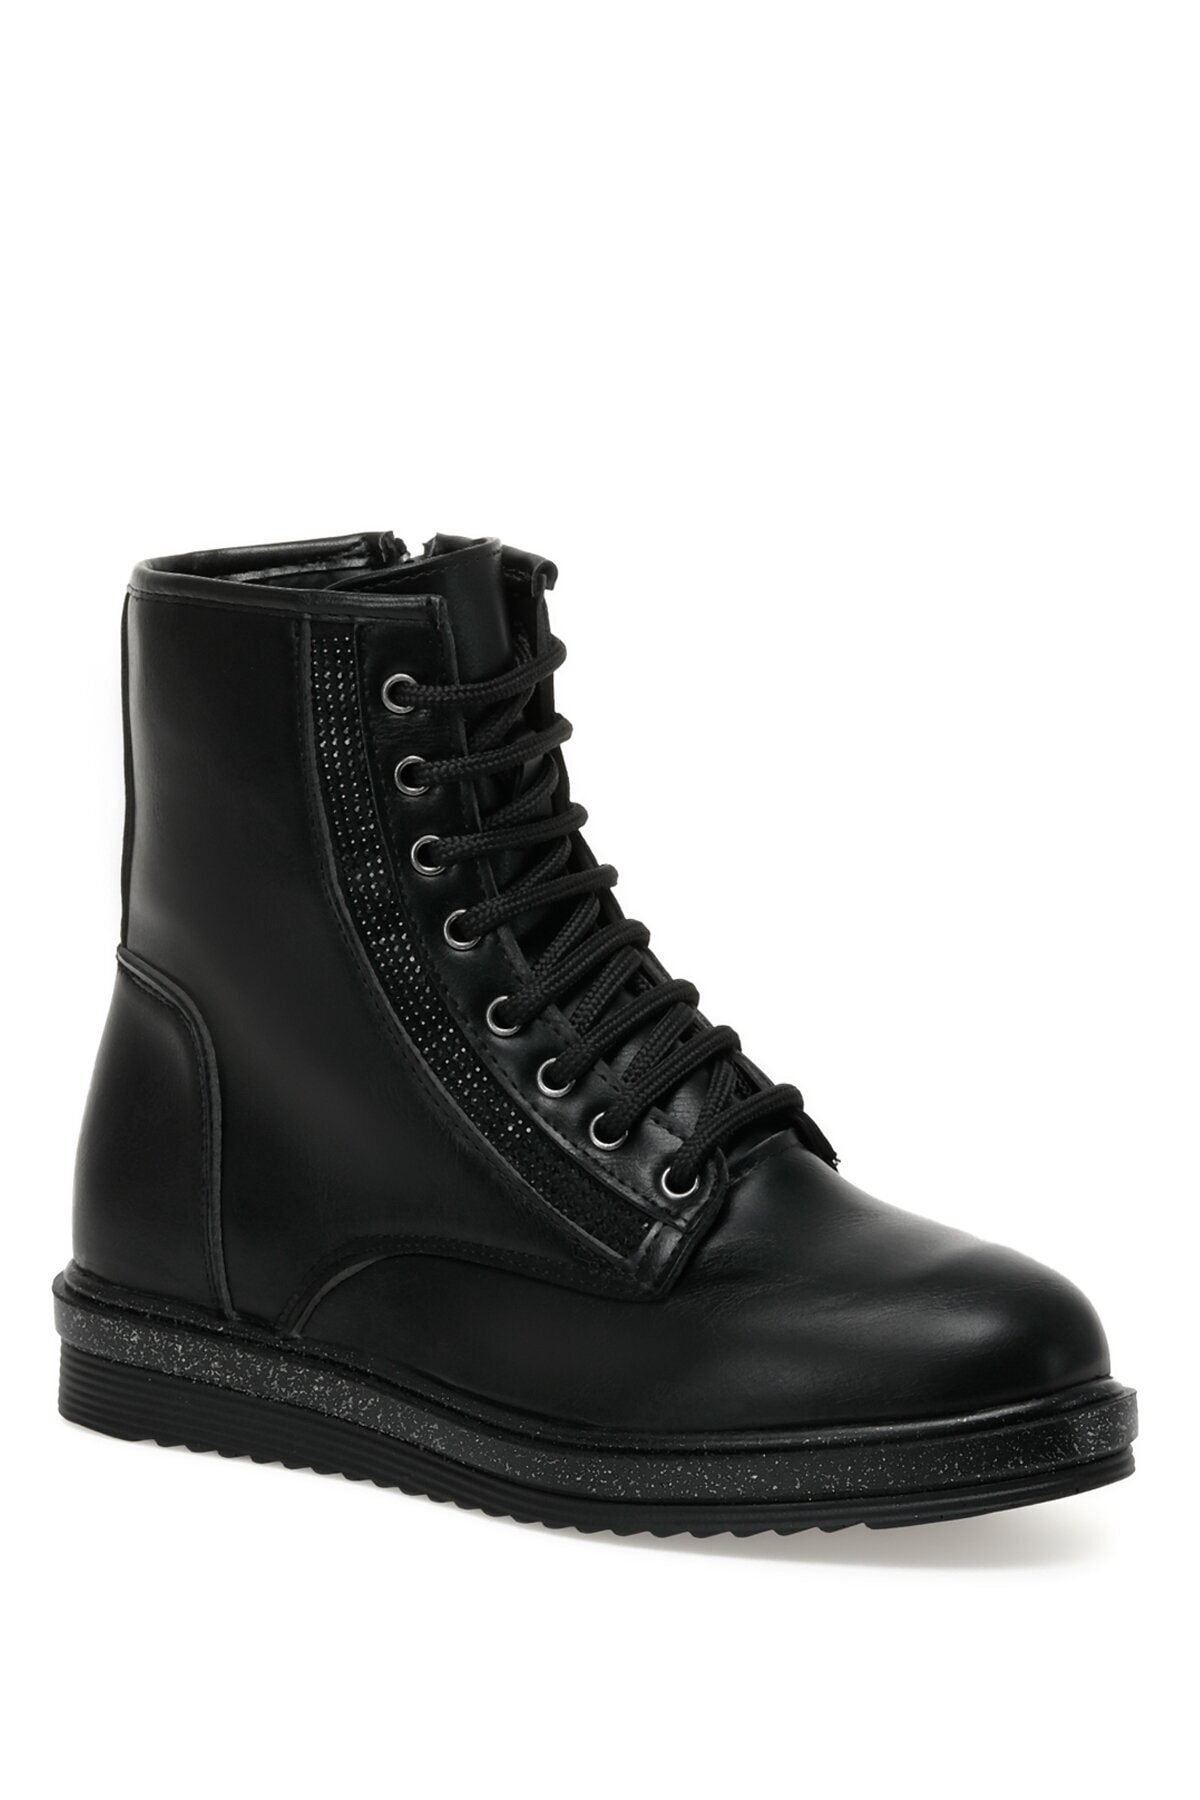 Polaris 320095.z 2pr Women's Black Flat Boots